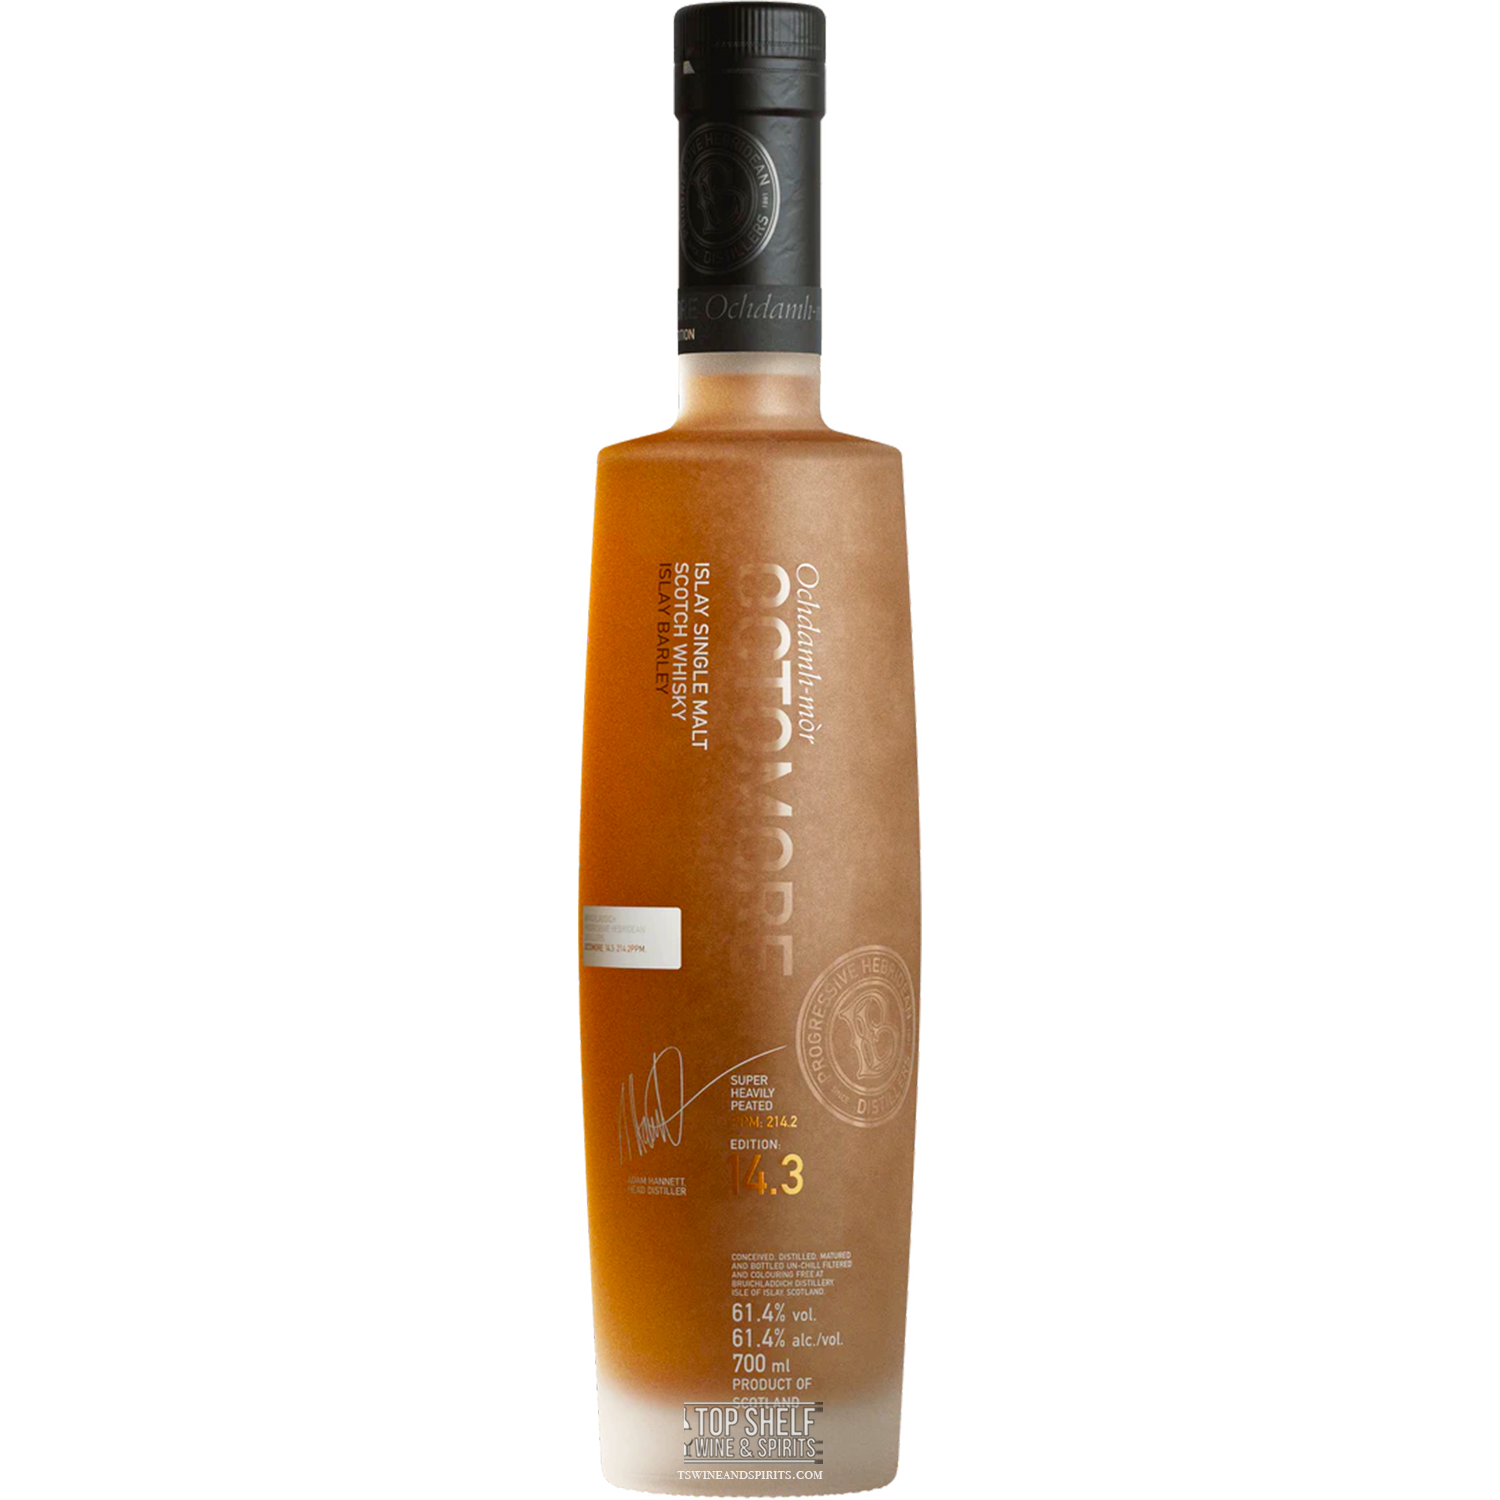 Bruichladdich Octomore 14.3 Single Malt Scotch Whisky